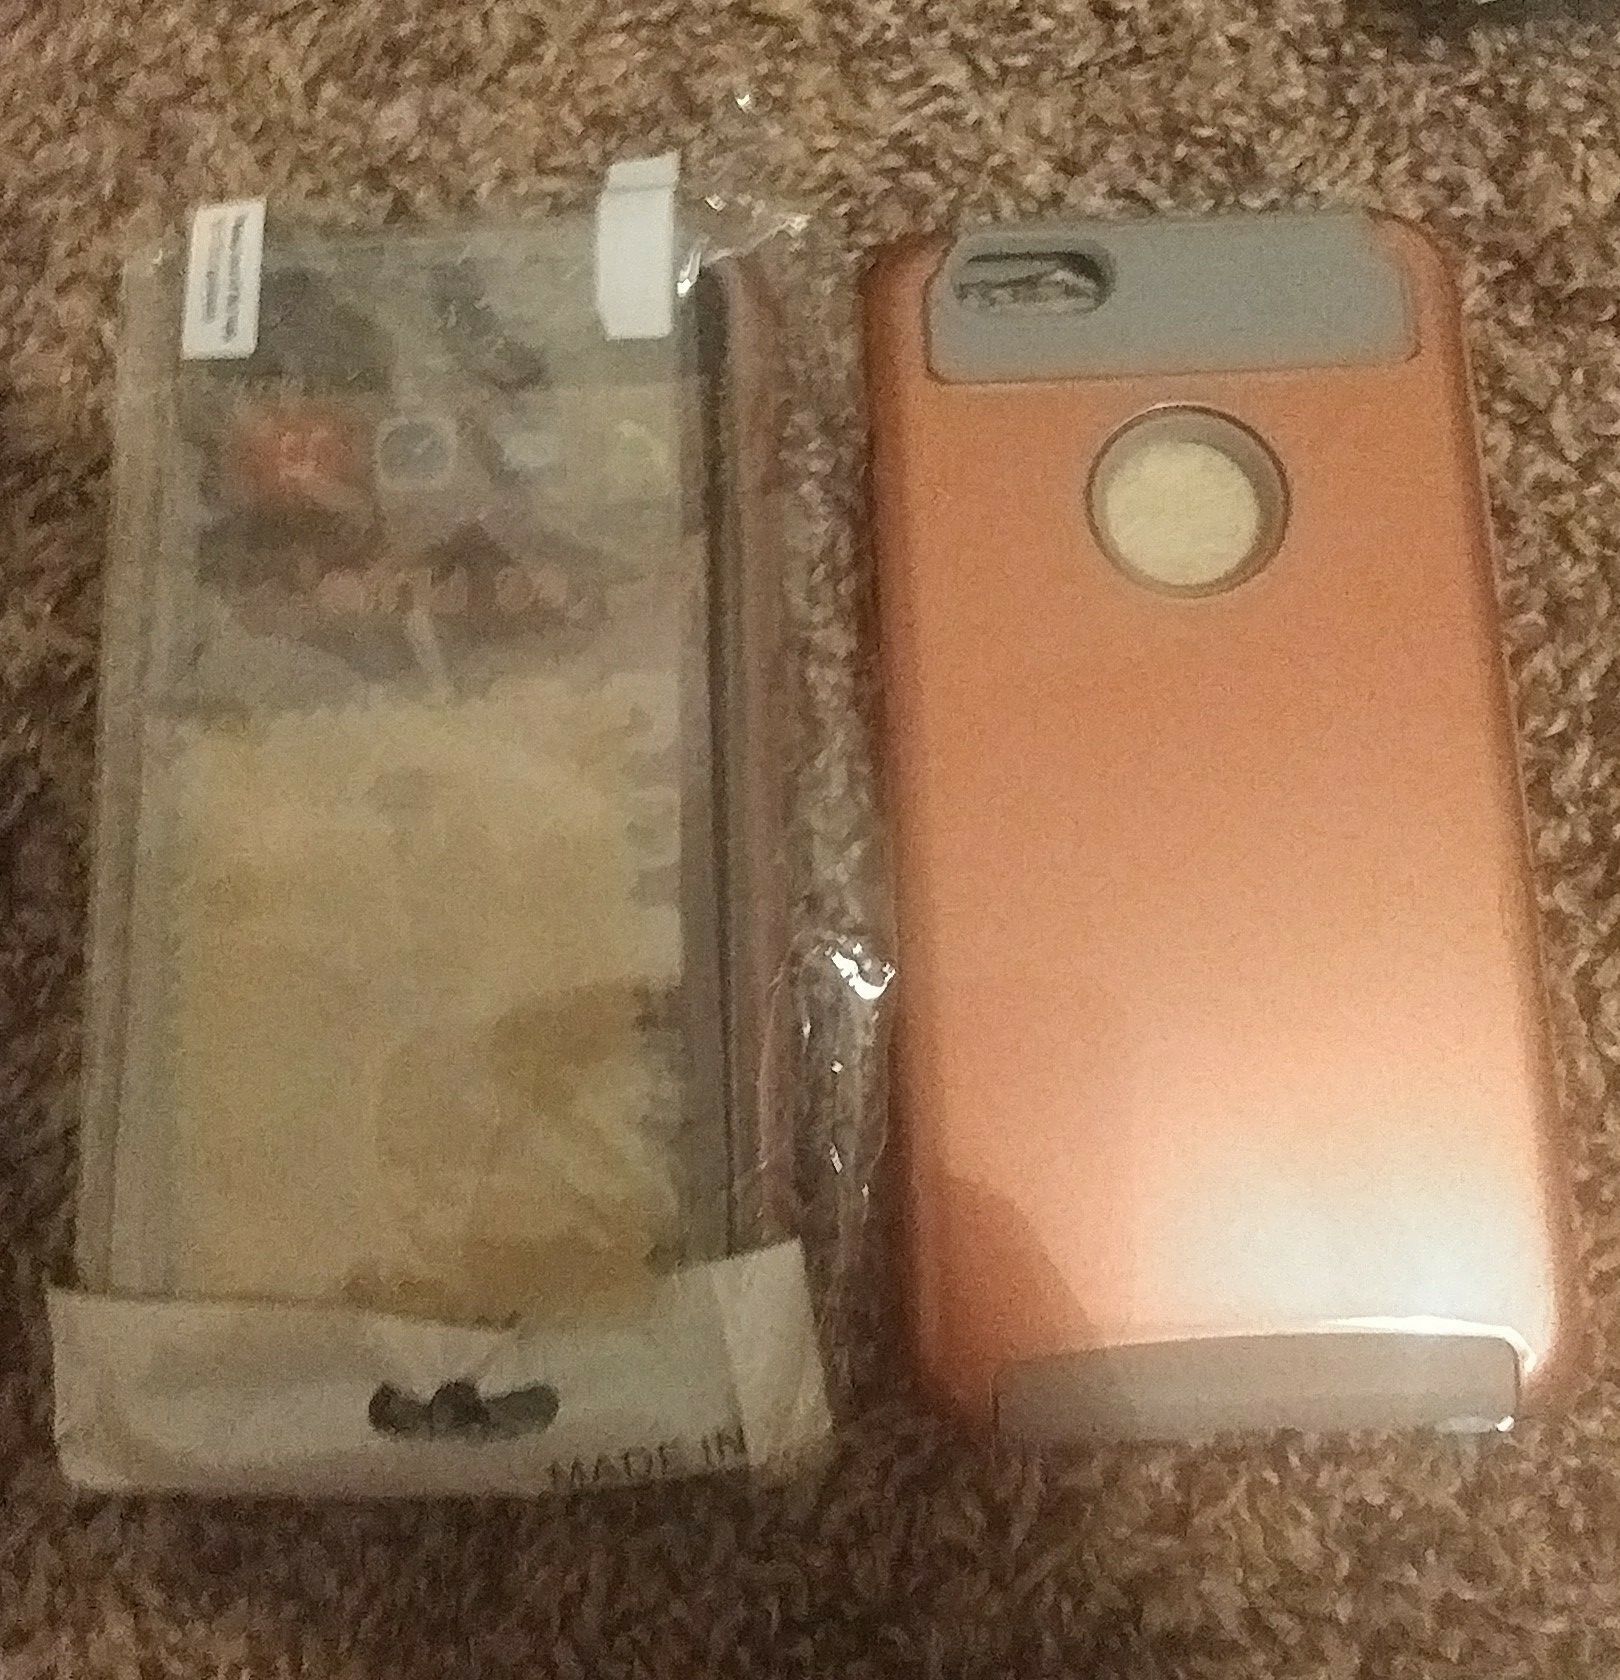 2 rose gold iPhone 6plus cases New